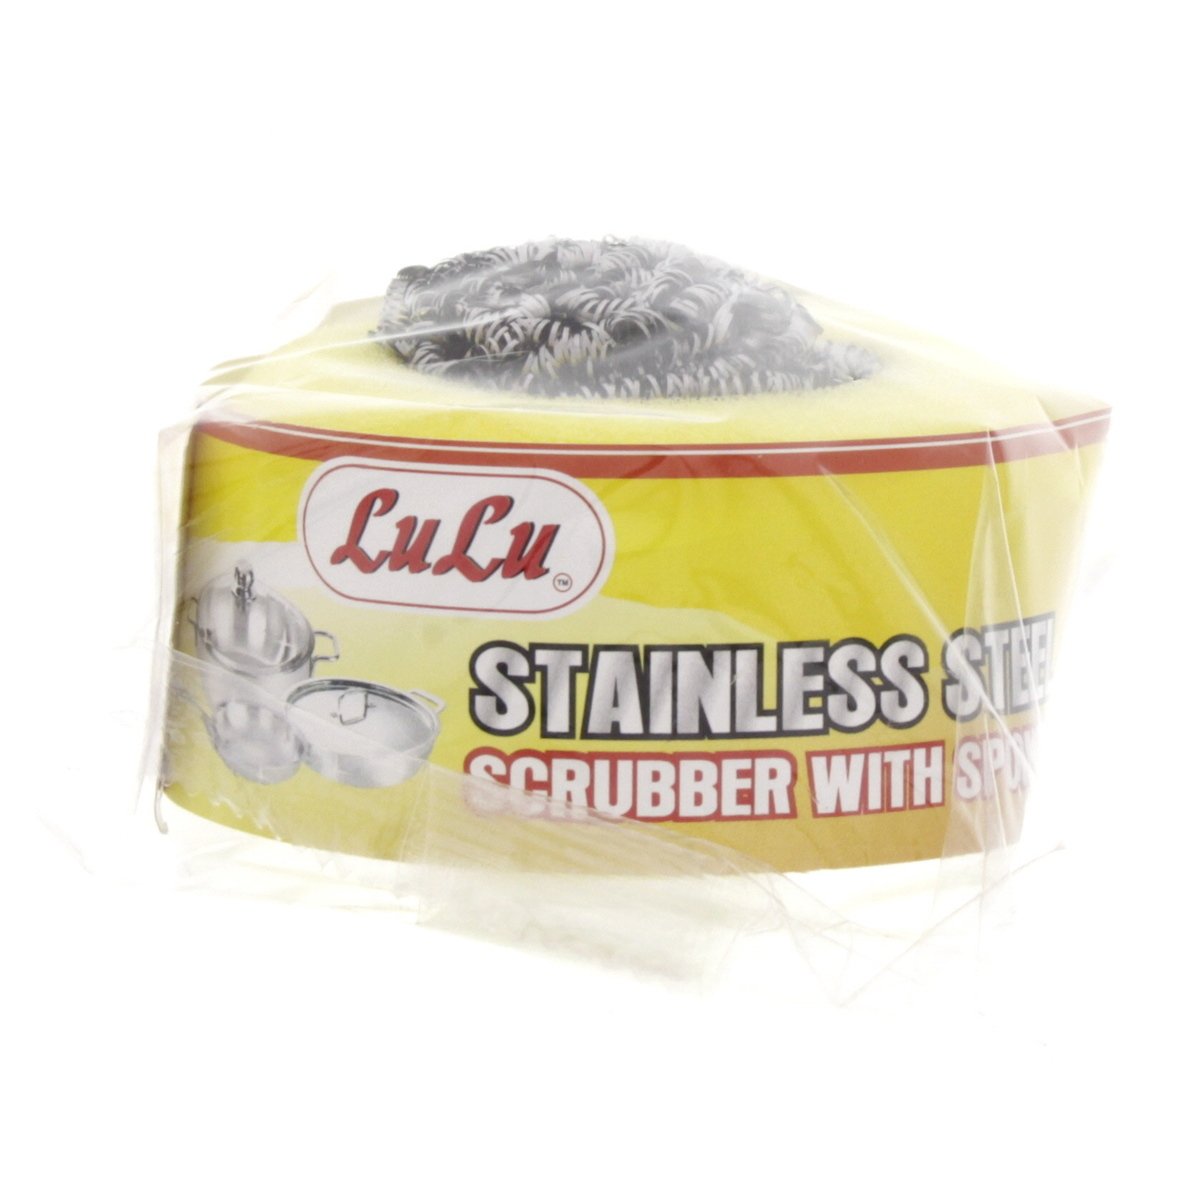 LuLu Stainless Steel Scrubber With Sponge 1pc